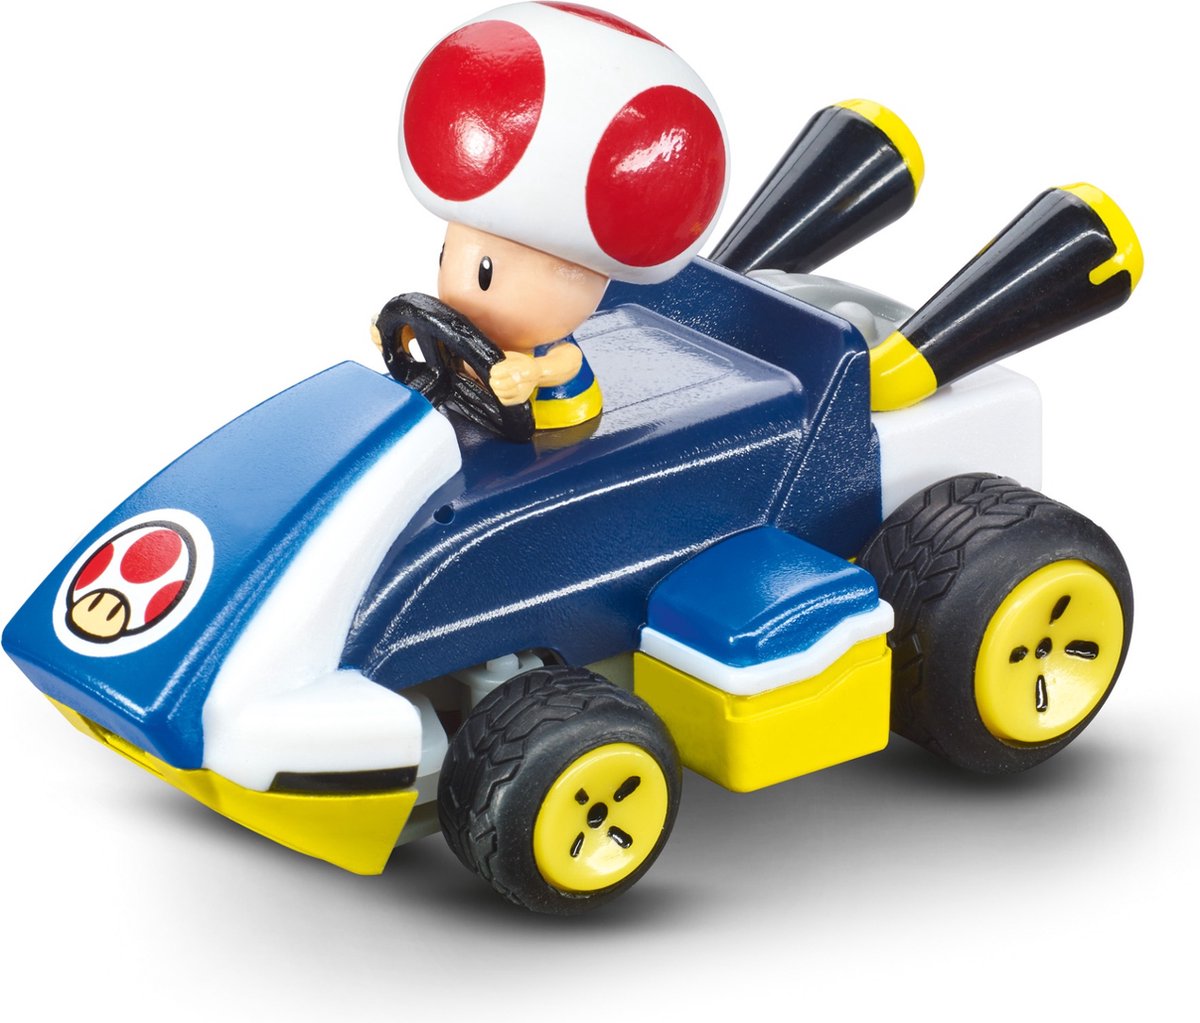 Mario race kart et sa 2ème batterie offerte